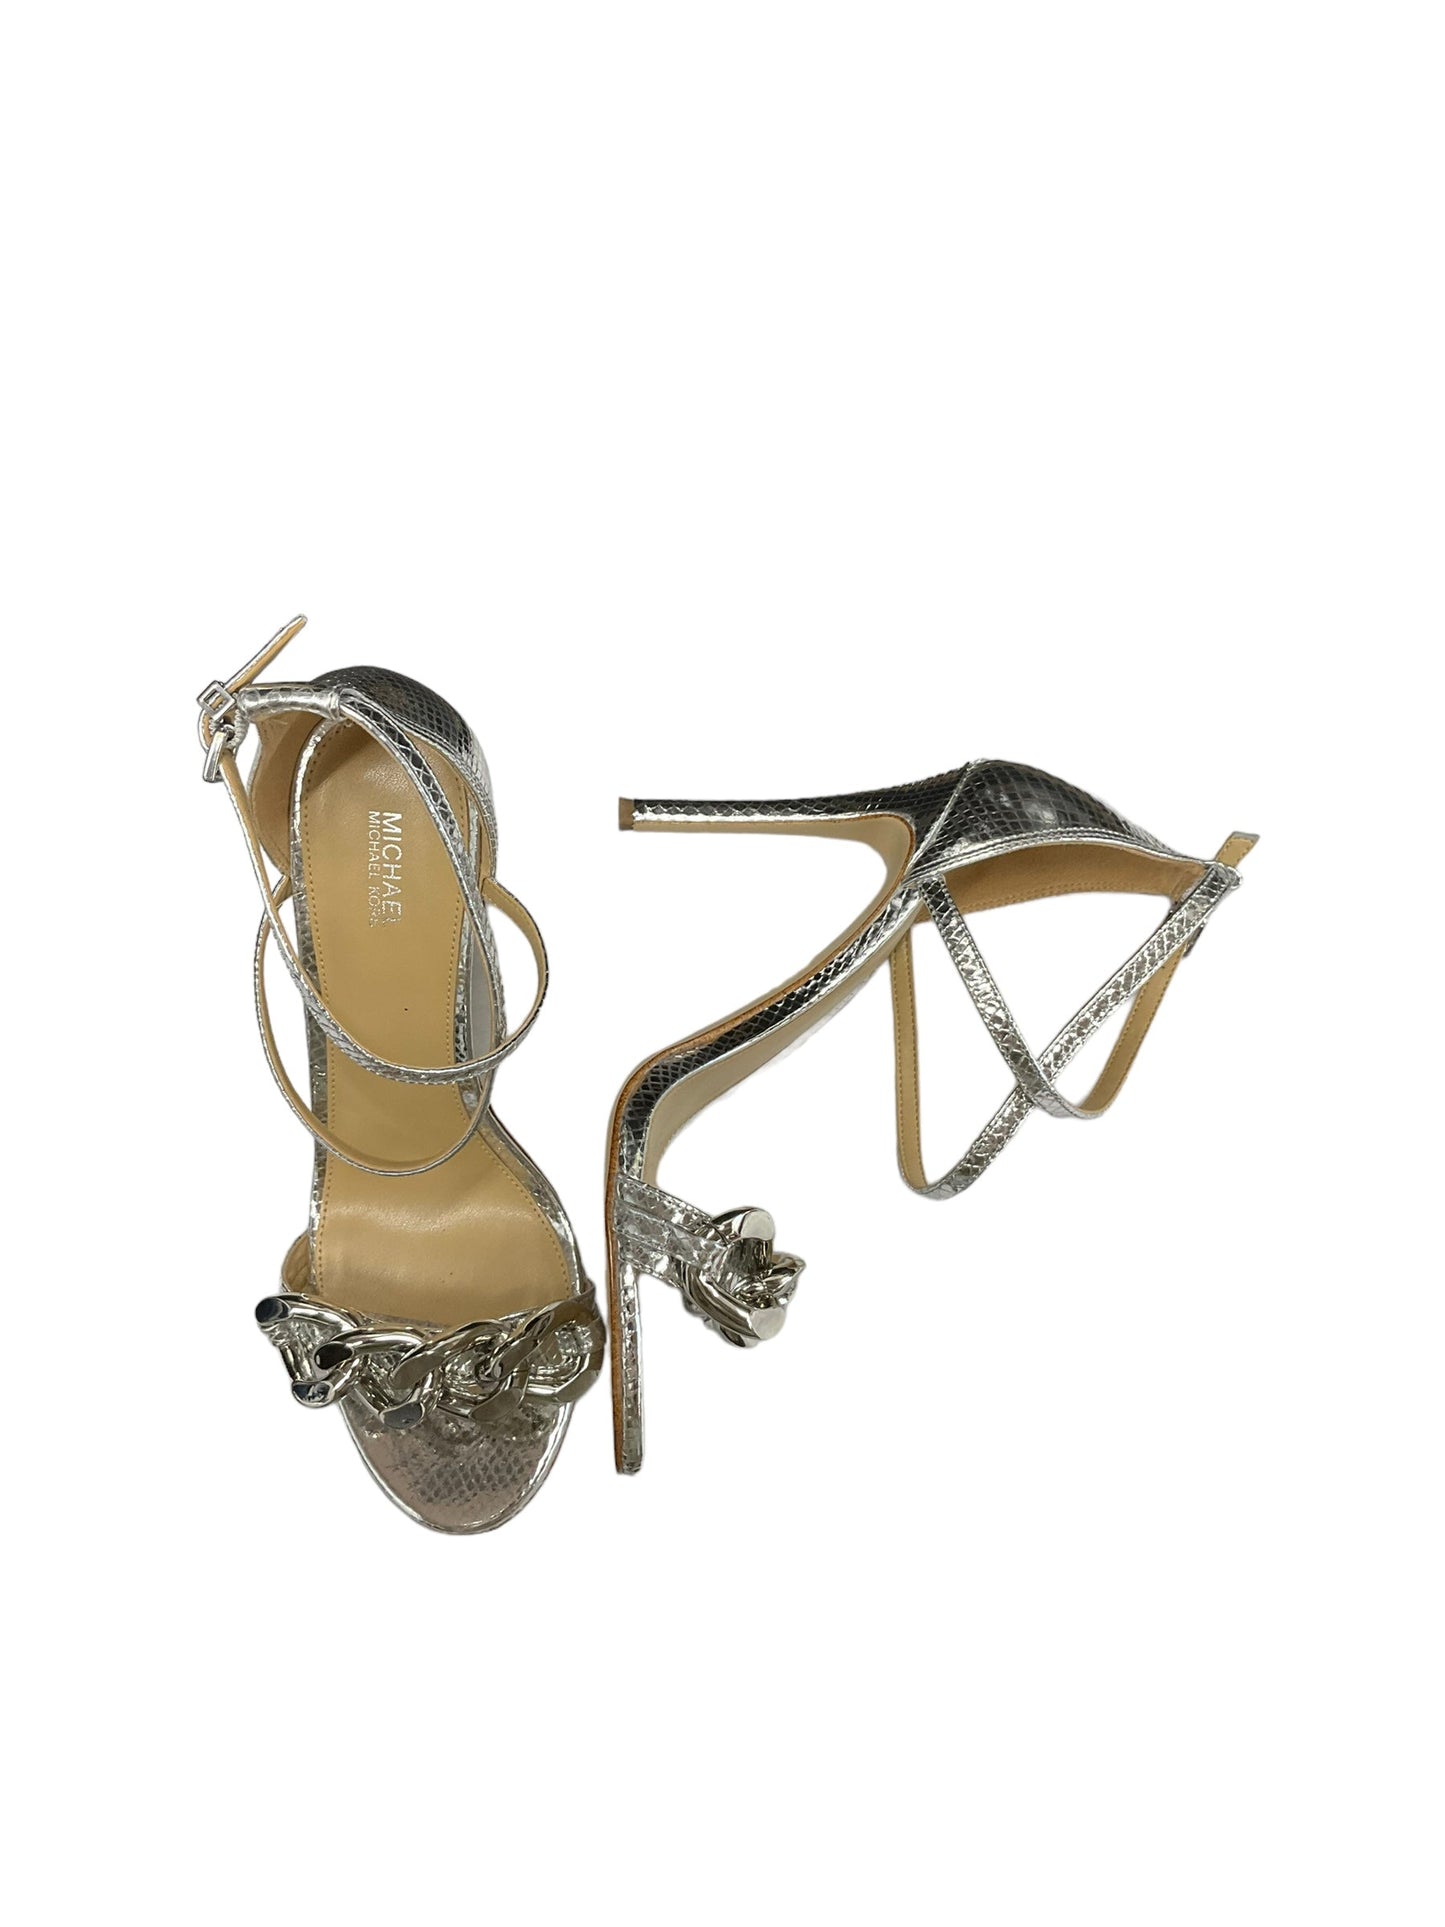 Silver Shoes Heels Stiletto Michael Kors, Size 8.5